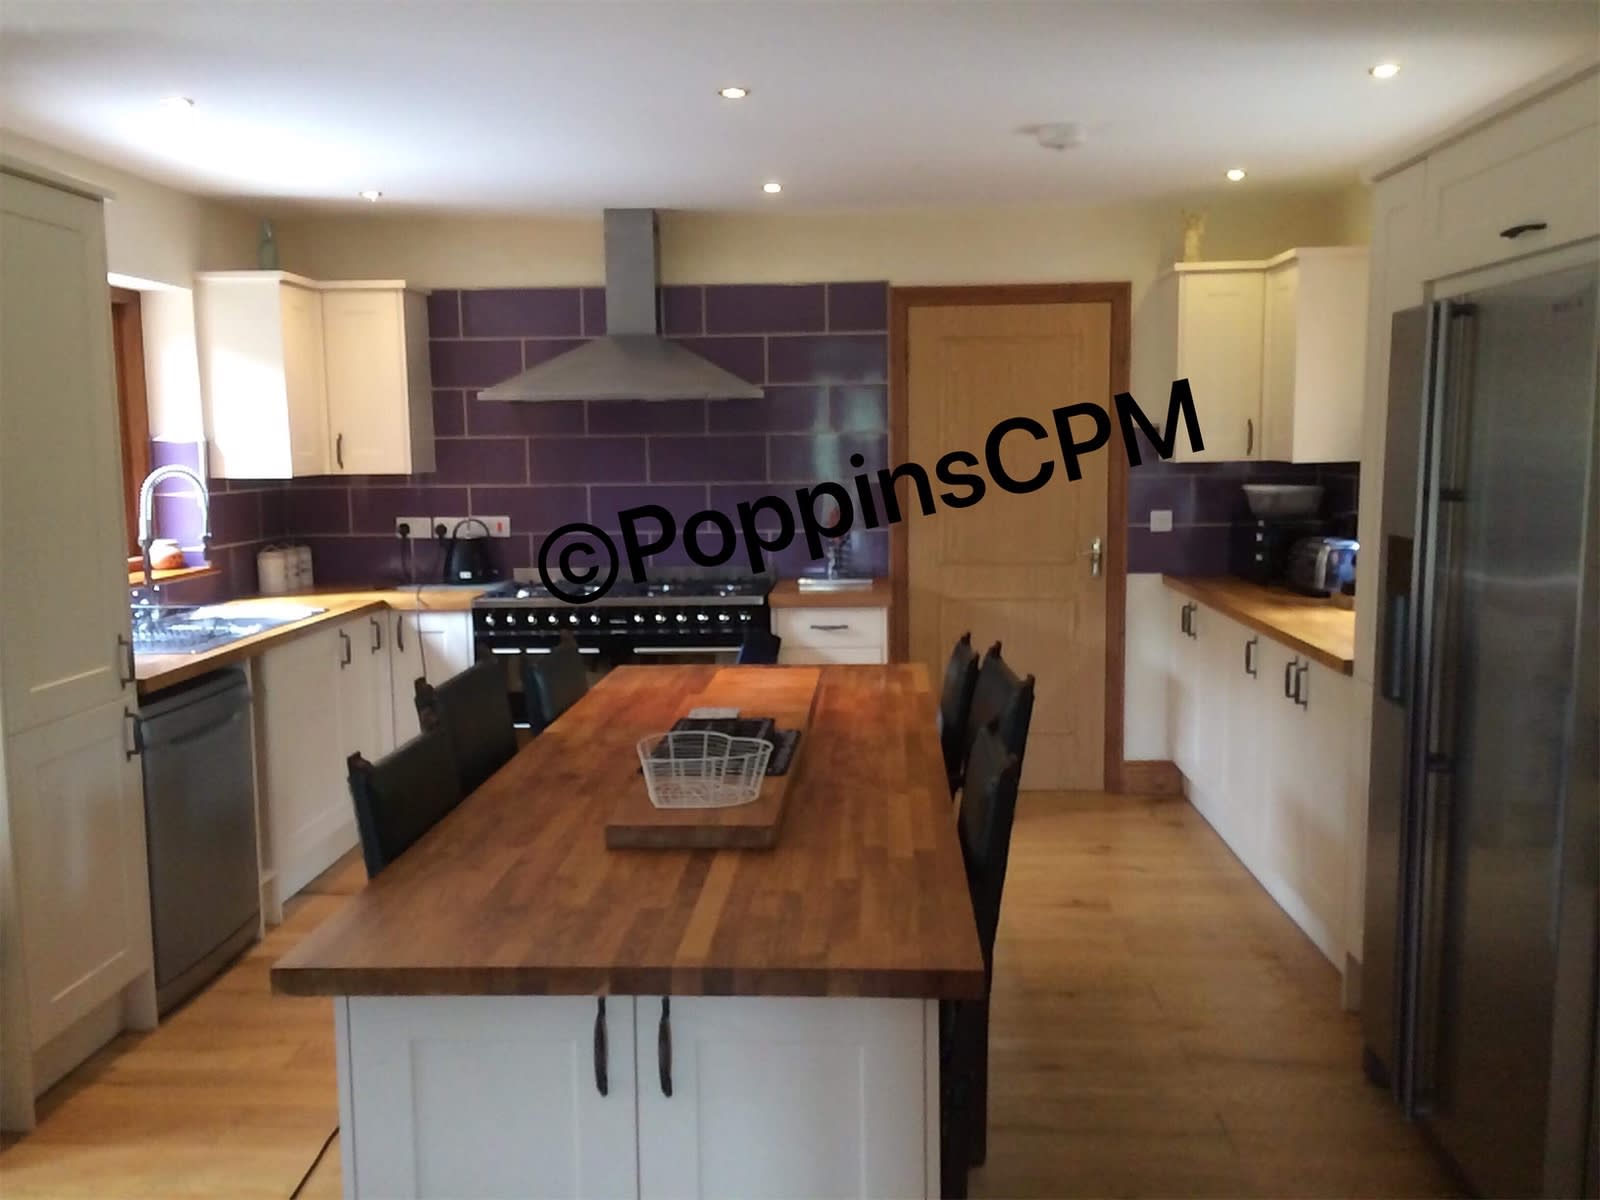 Poppins Cleaning & Property Management Shrewsbury 07858 250576